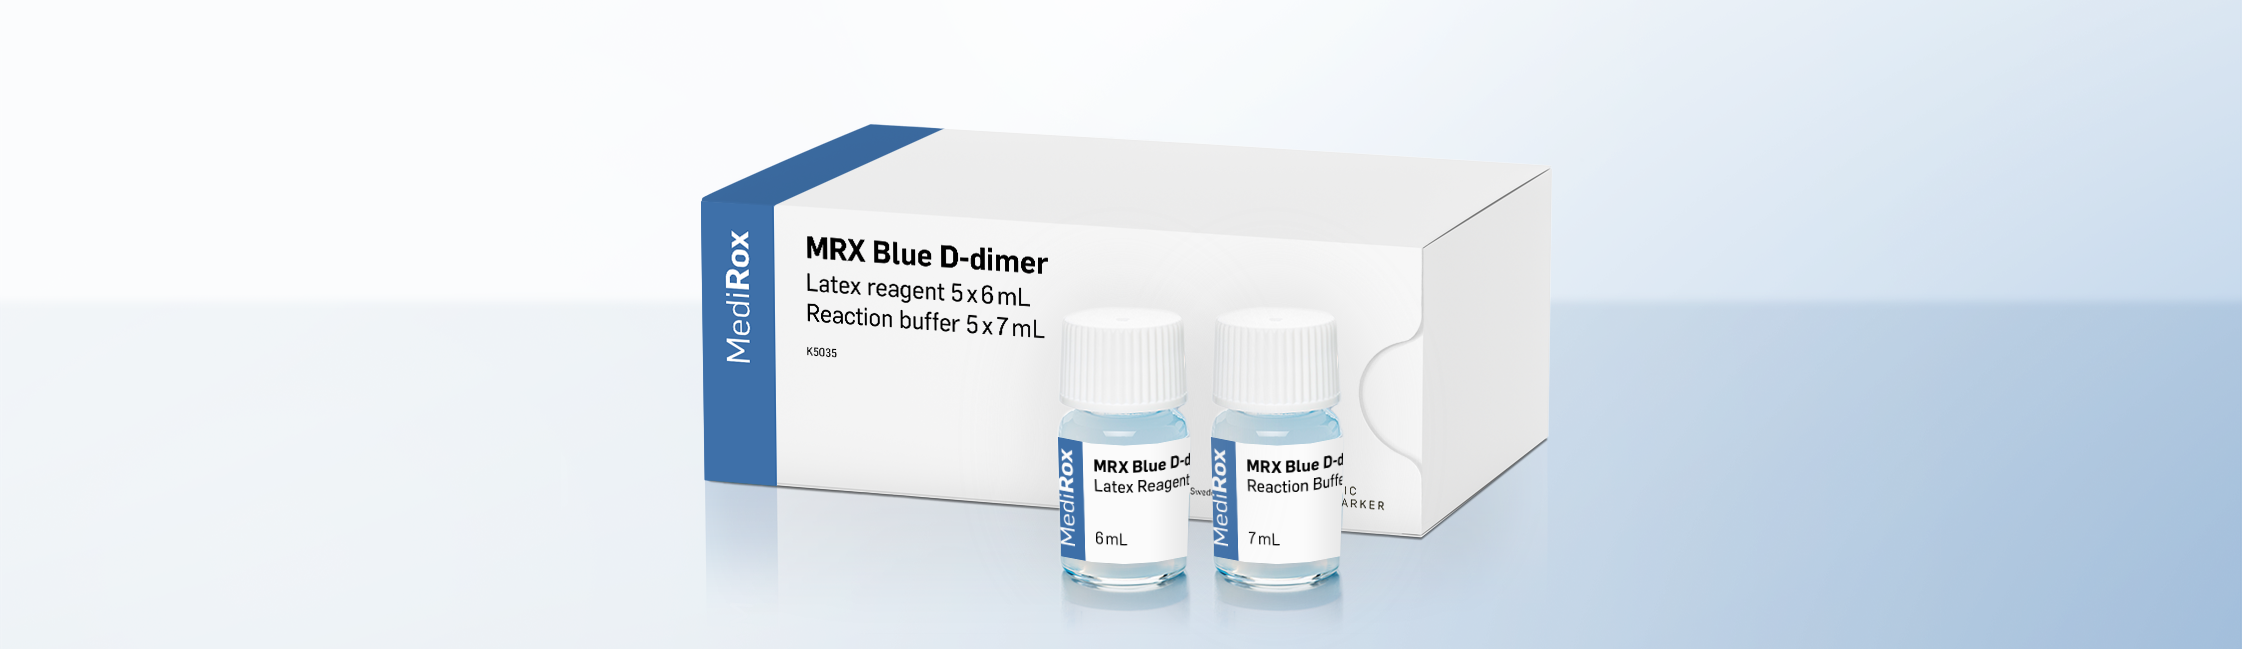 MRX Blue D-dimer